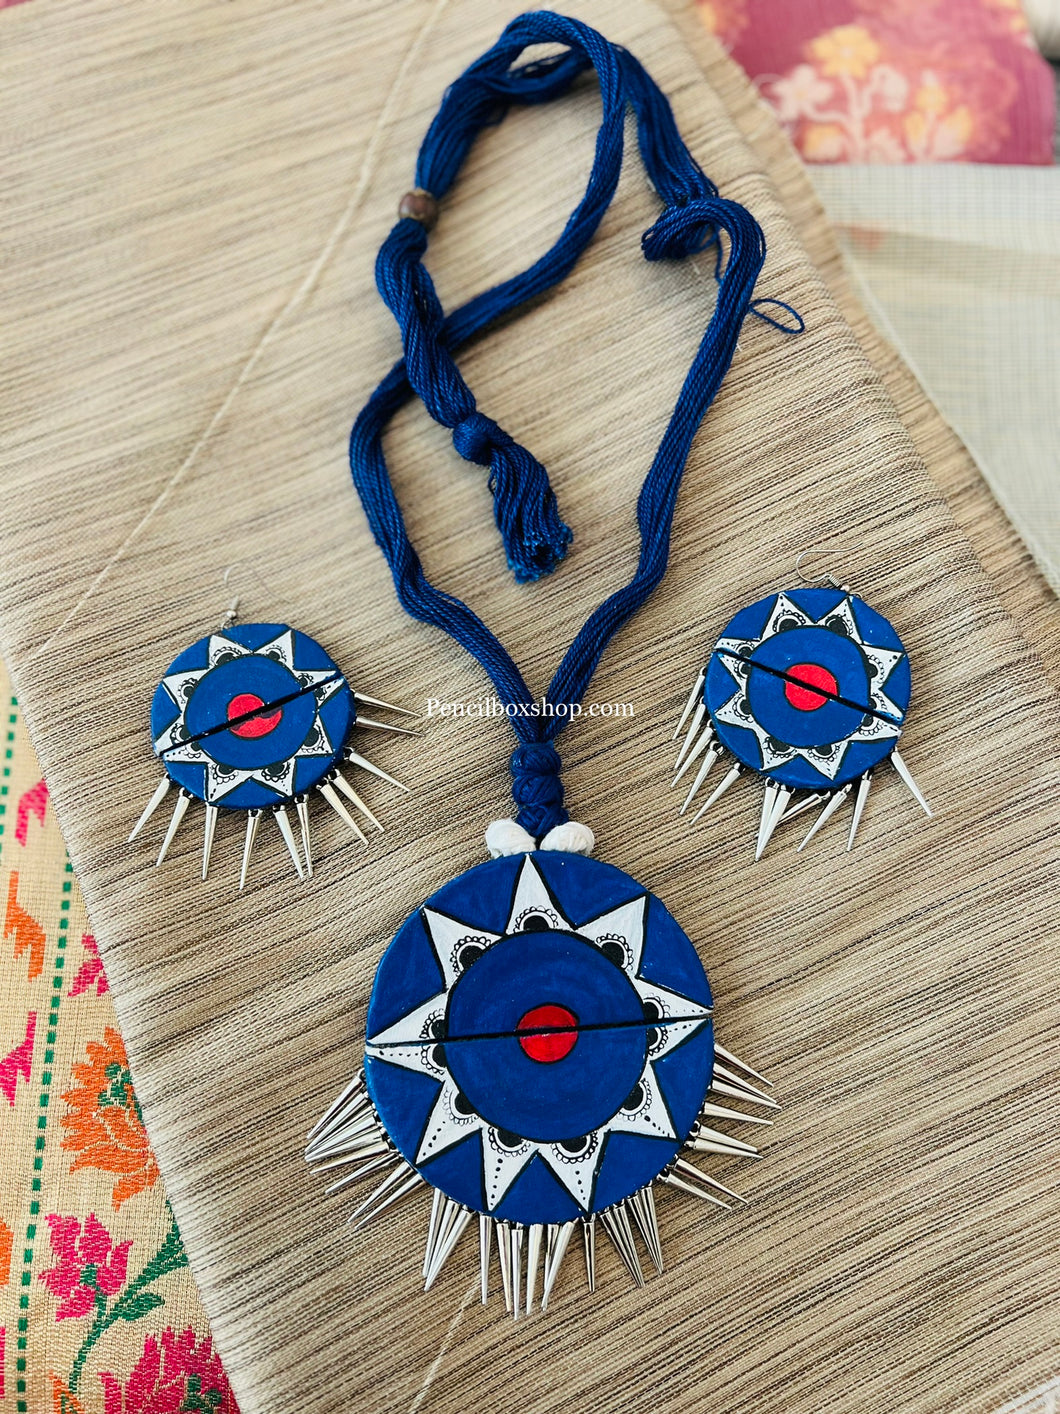 Handmade Handpainted Statement Blue Red White half Cut necklace set